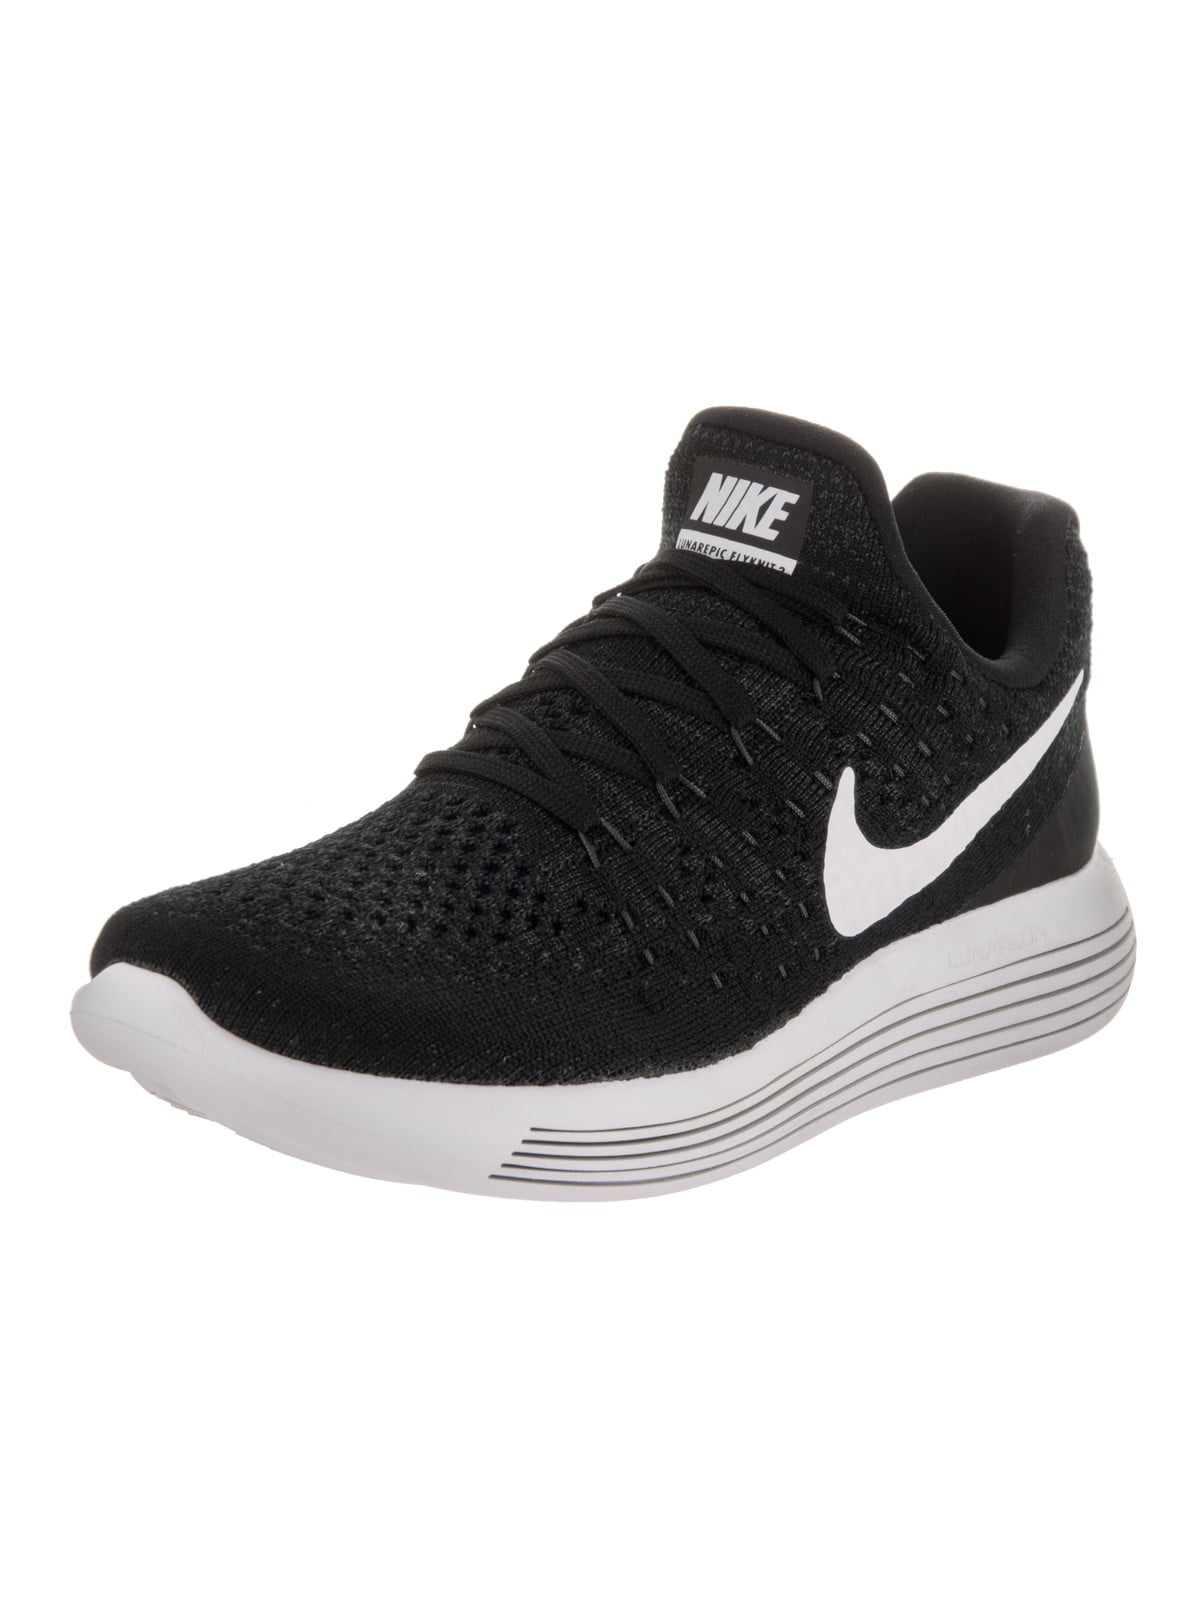 Nike Lunarepic Low Running Shoe - Walmart.com